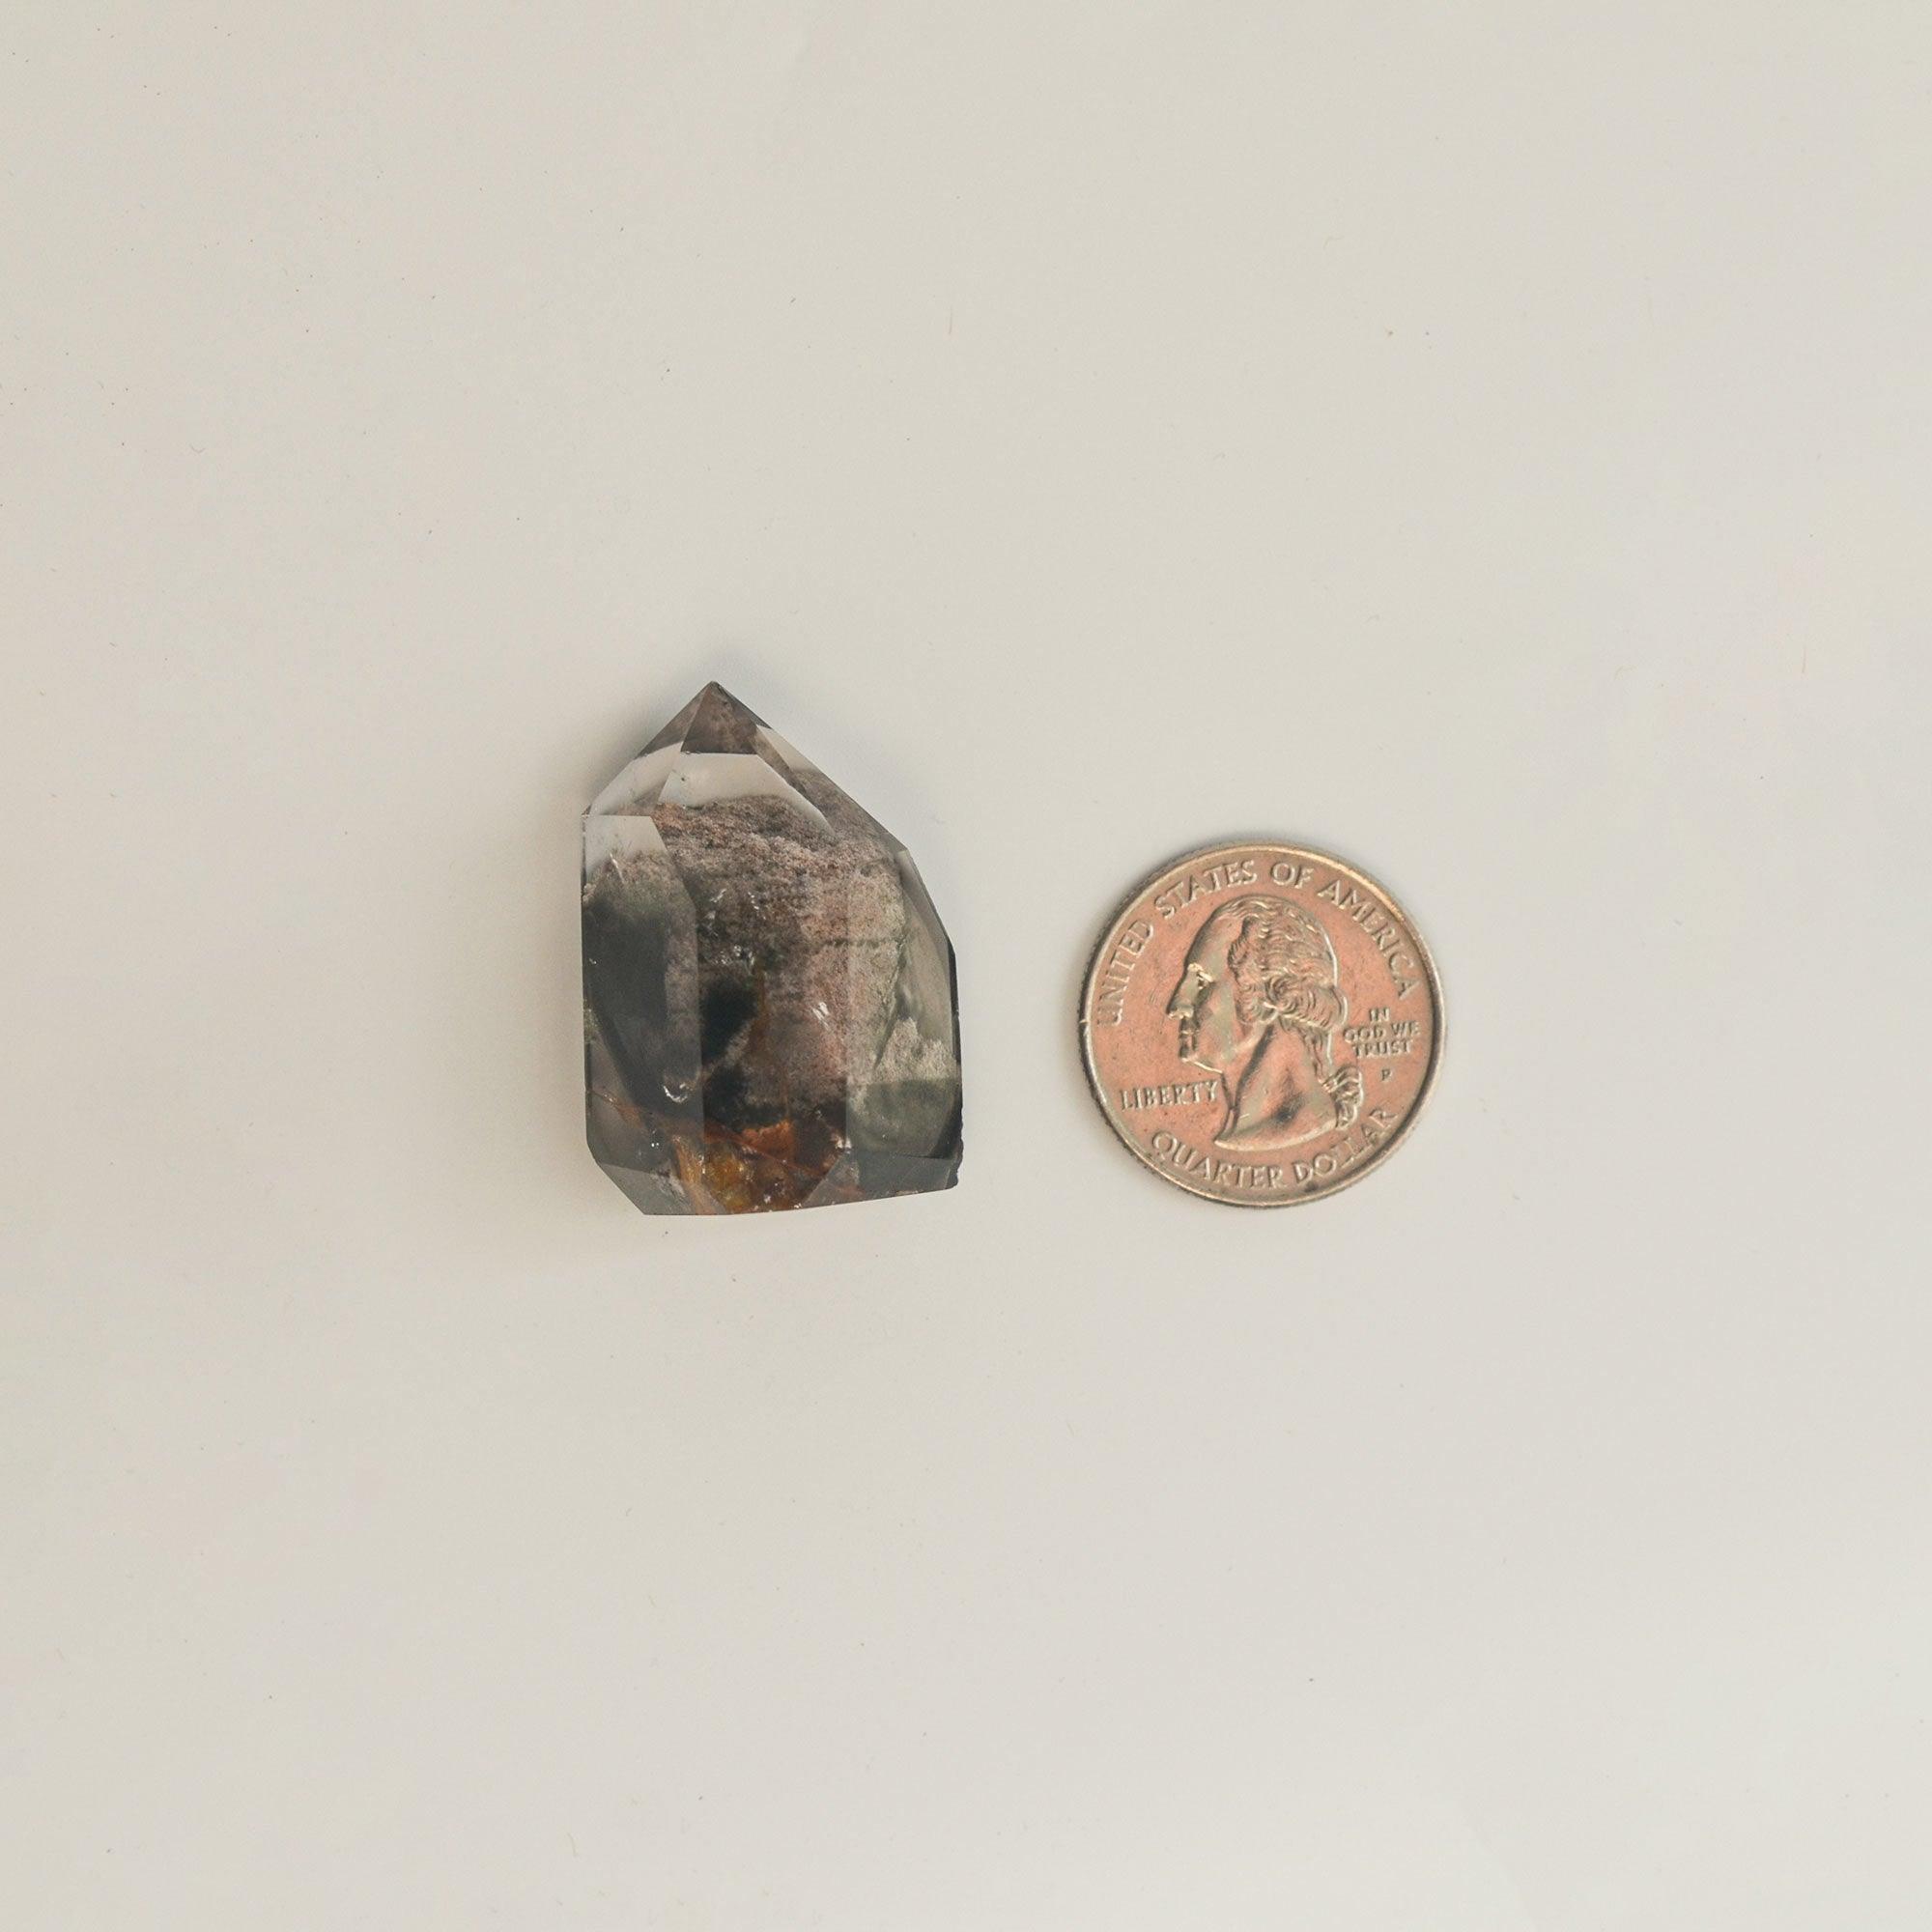 mini crystal of phantom quartz with quarter dollar coin